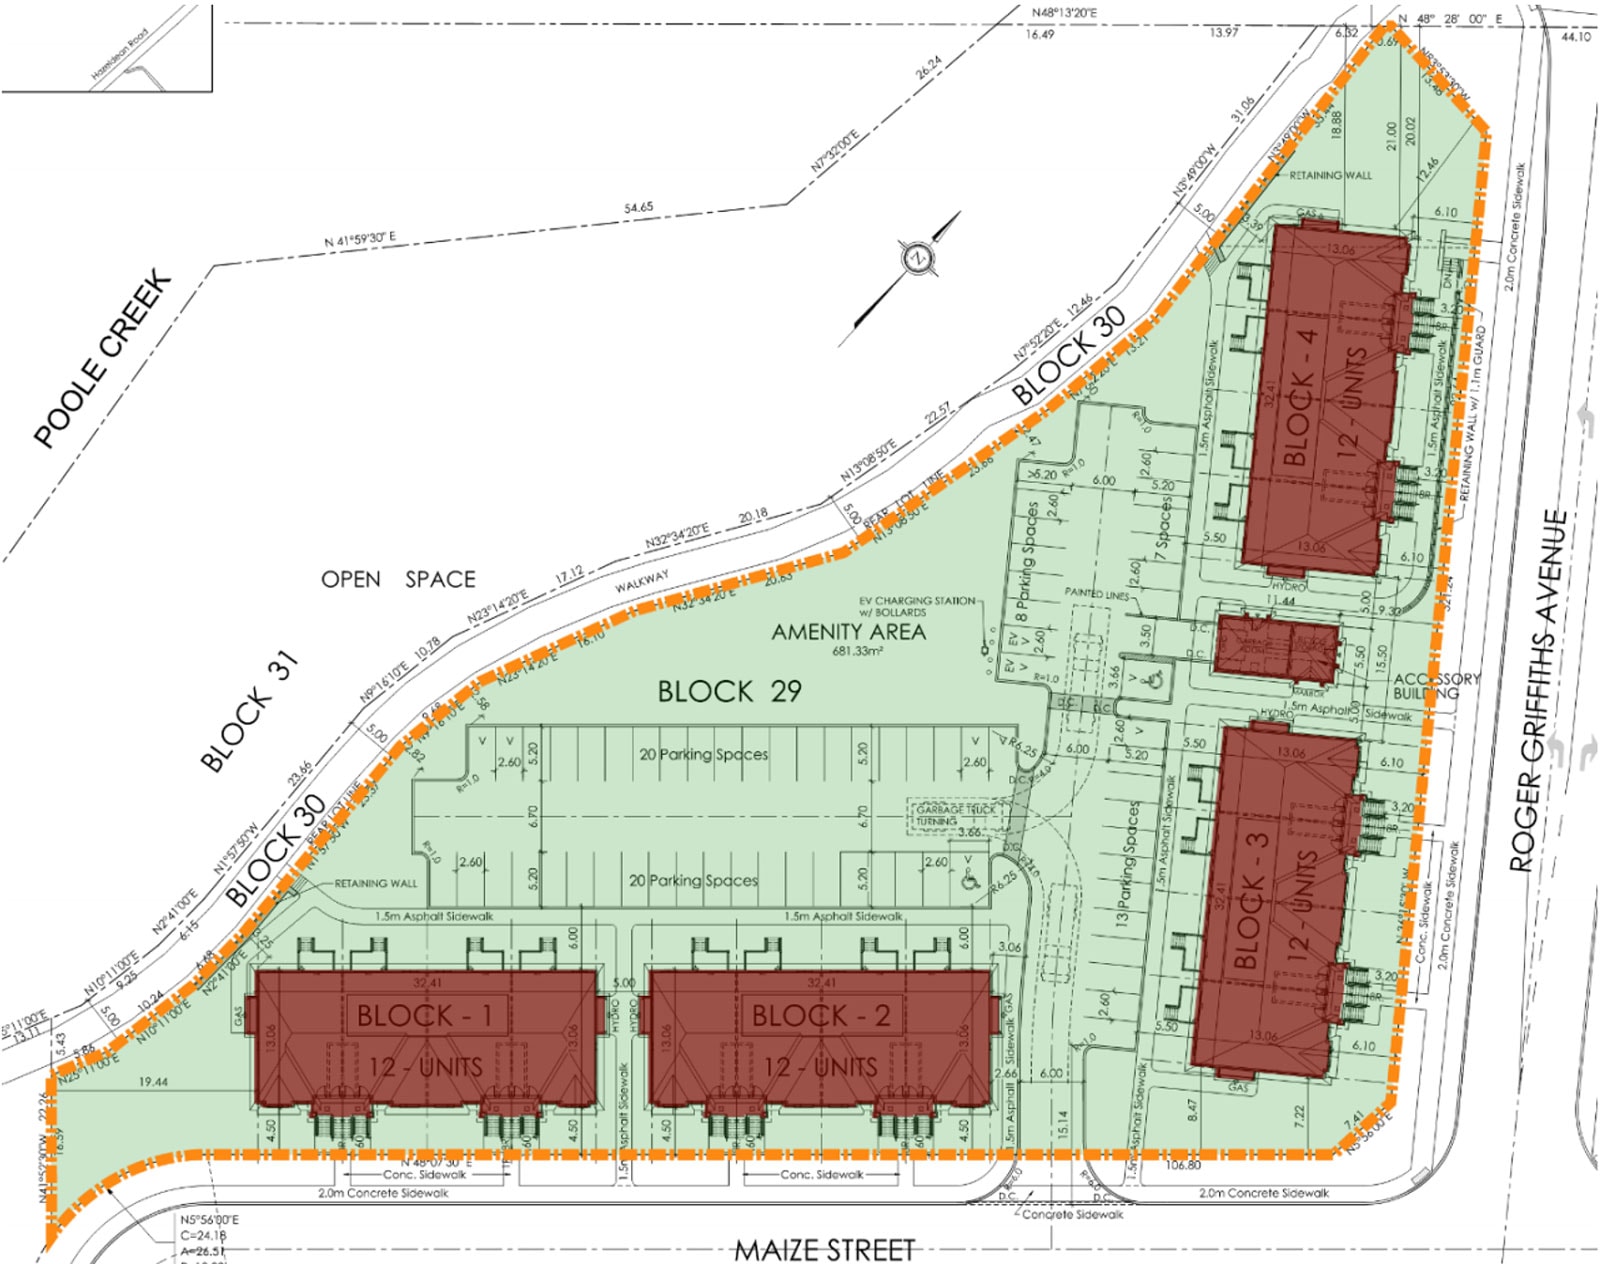 1620 Maple Grove site plan